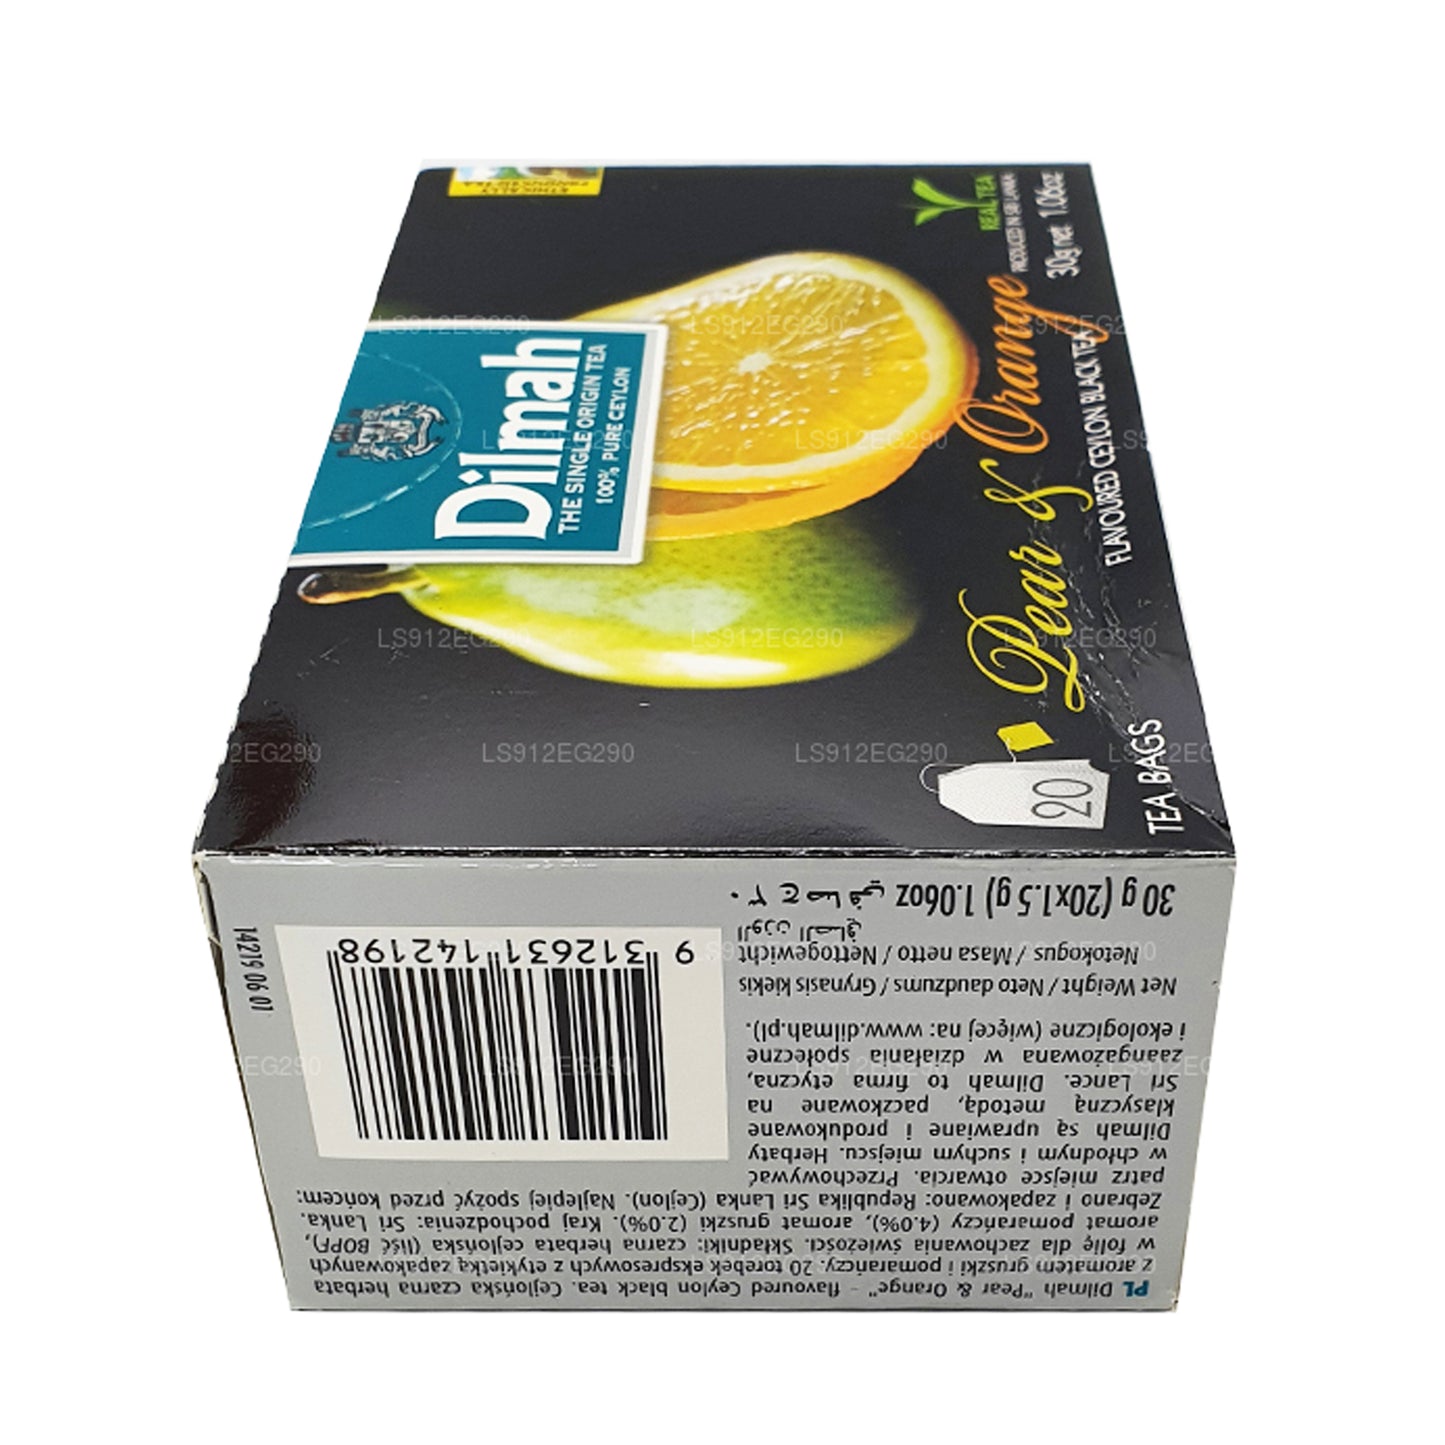 Dilmah Pear and Orange 味锡兰红茶 (30g) 20 茶包